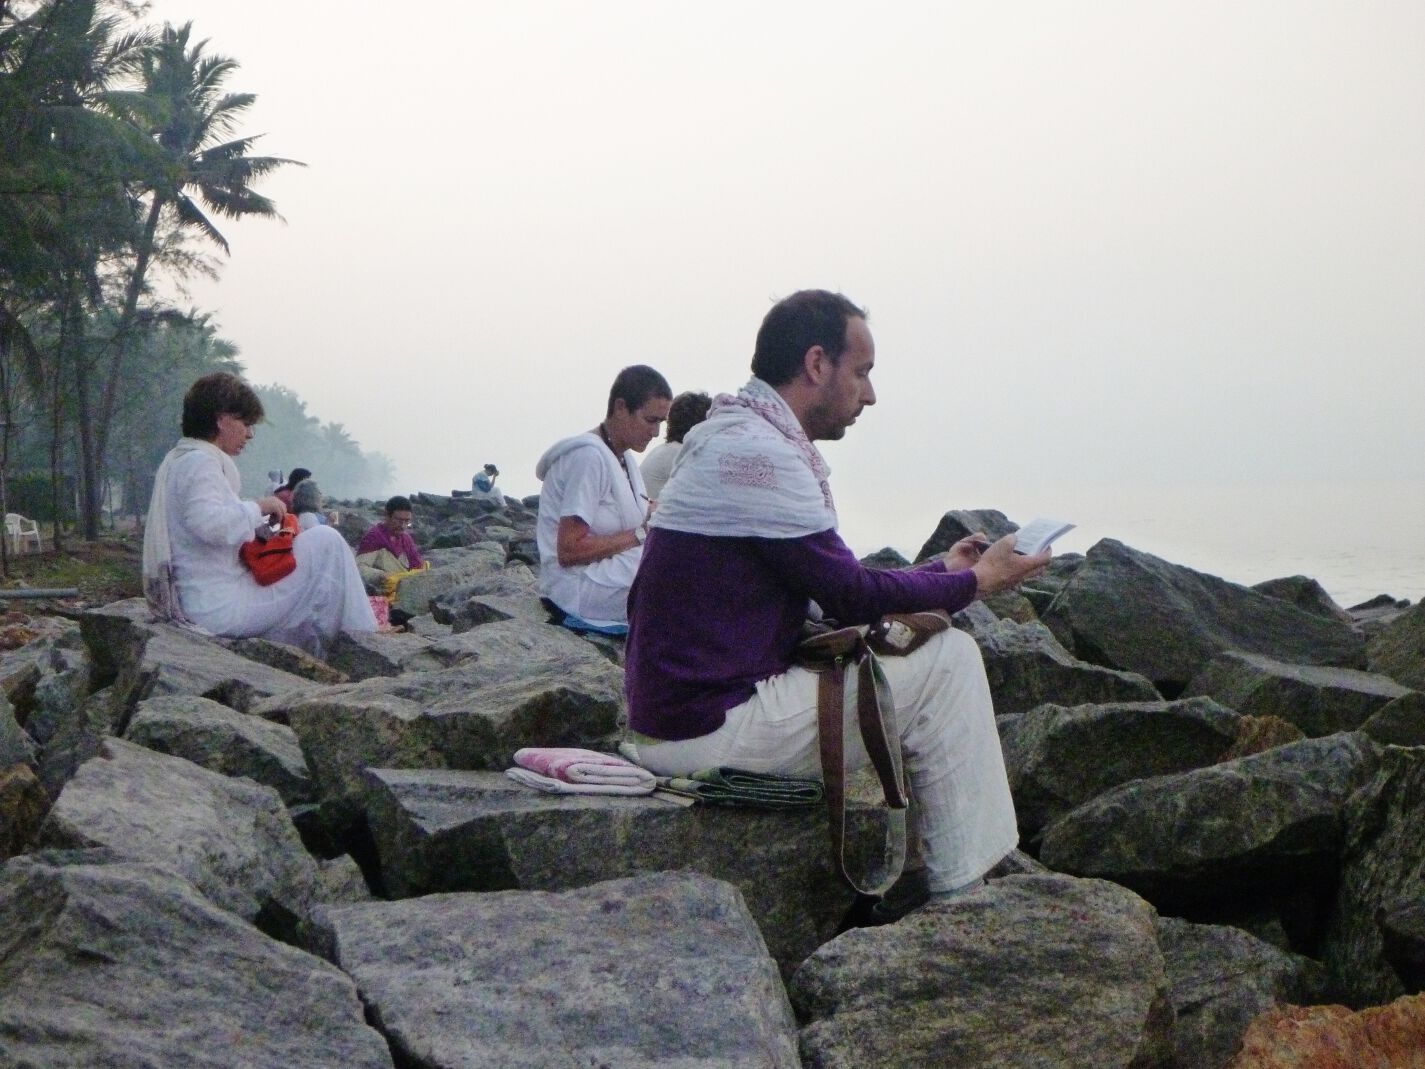 Devotees meditate on a beach in Amritapuri, India.